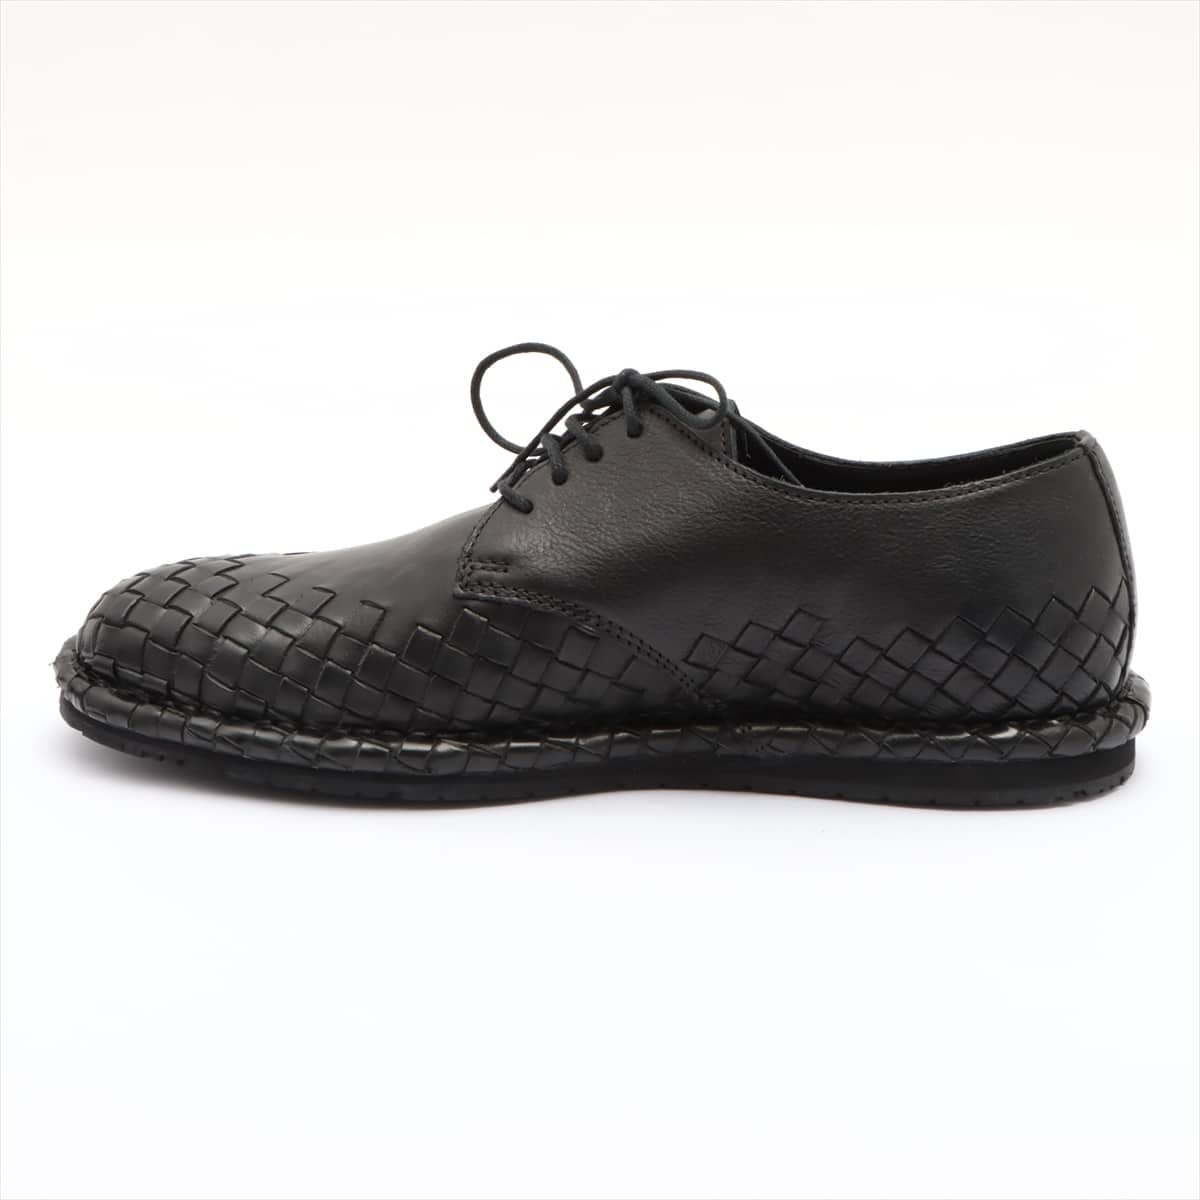 Bottega Veneta Leather Leather shoes 41 1/2 Men's Black Intrecciato